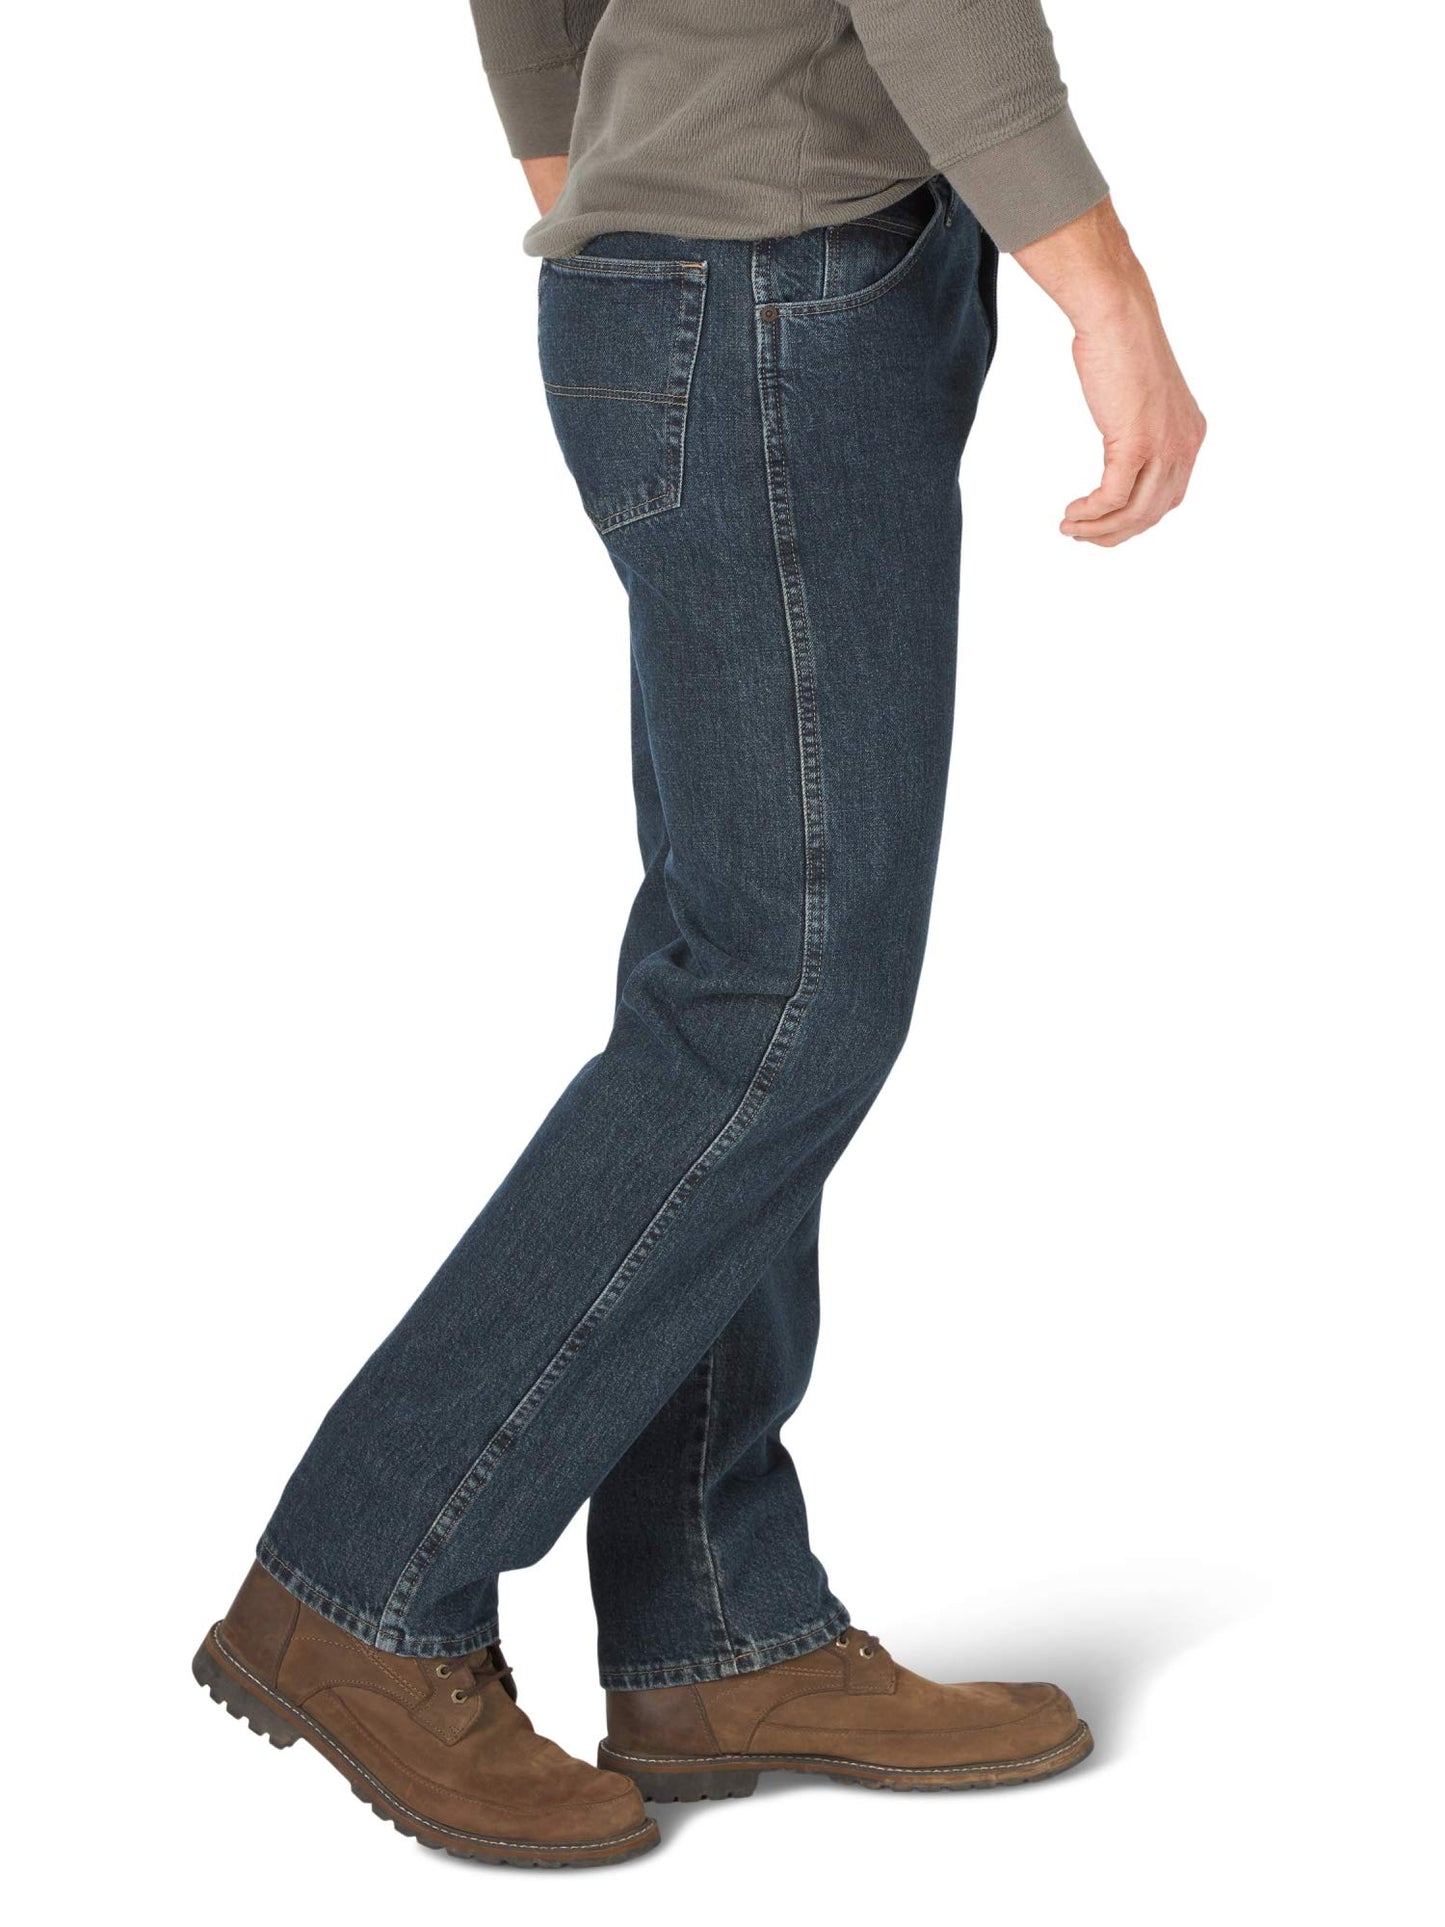 Wrangler Authentics Men's Classic 5-Pocket Regular Fit Cotton Jean, Storm, 31W x 32L